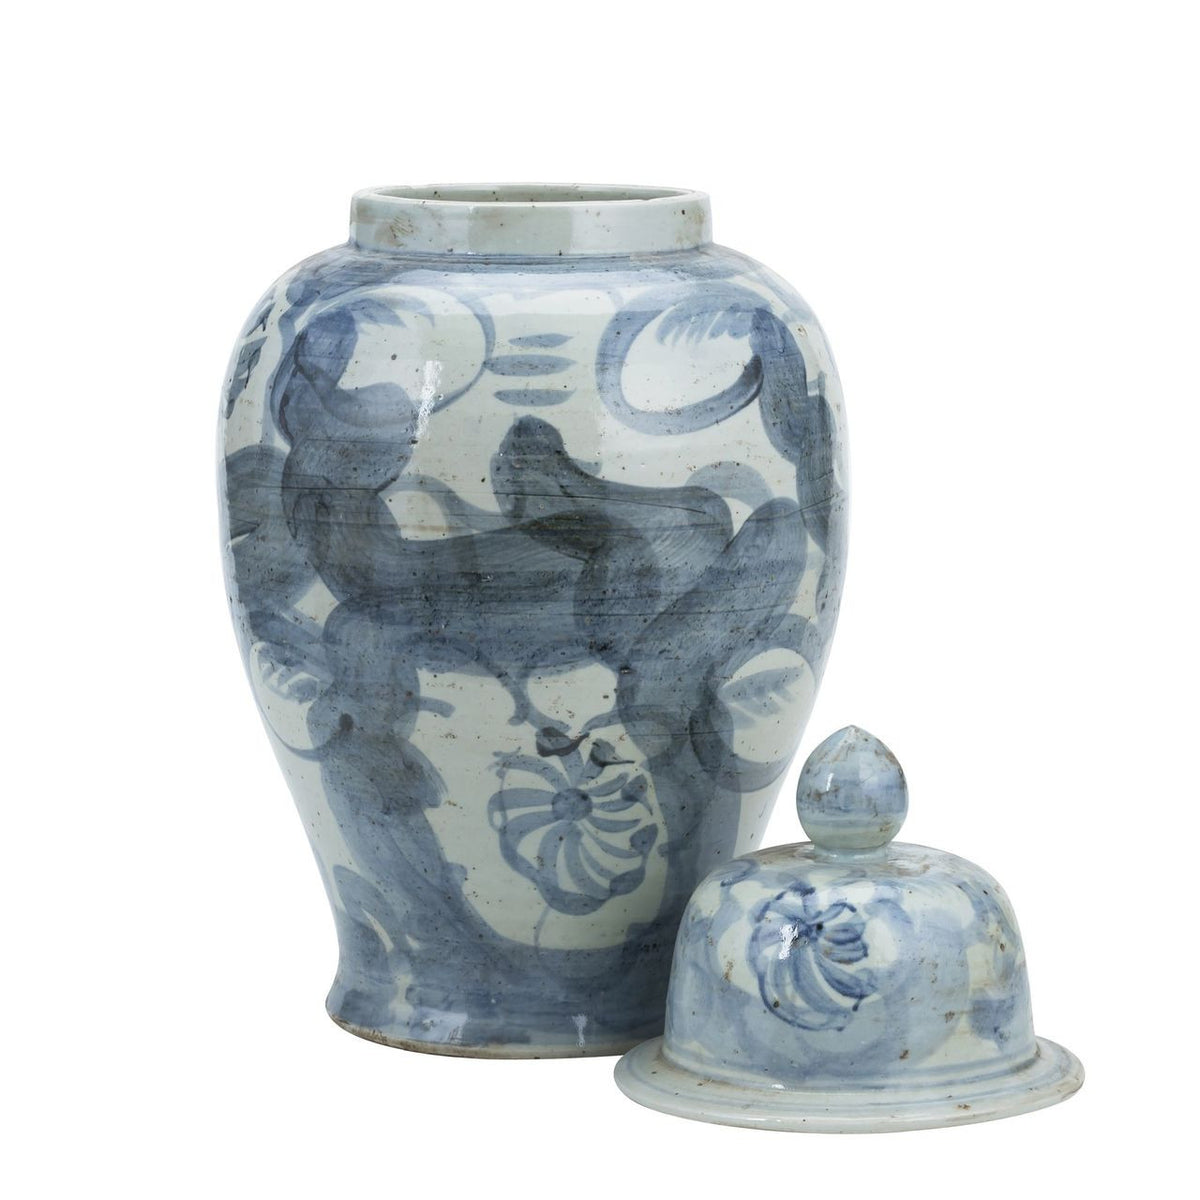 Decorative lidded temple jar in indigo sea flower